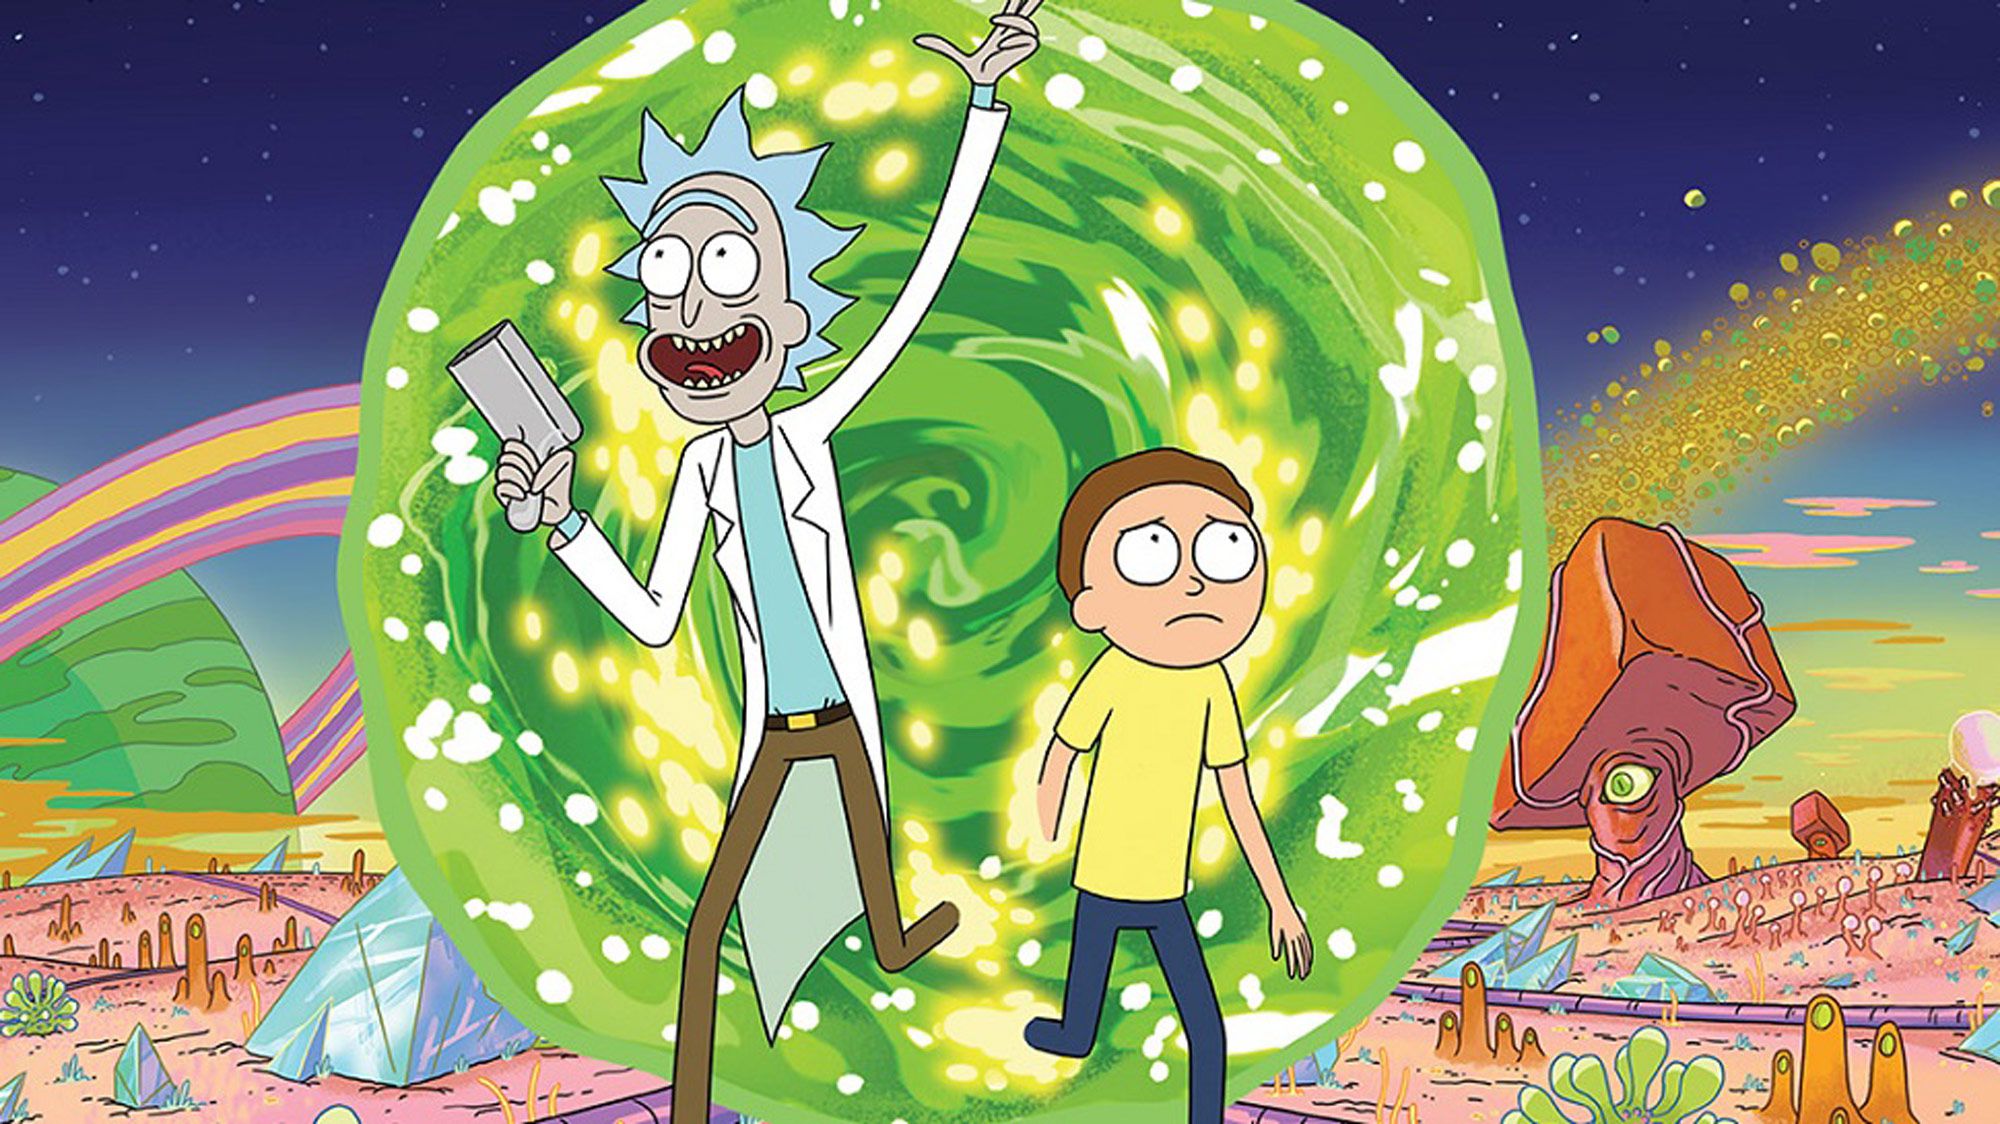 Rick and Morty Season 4 Episode 1 Plot